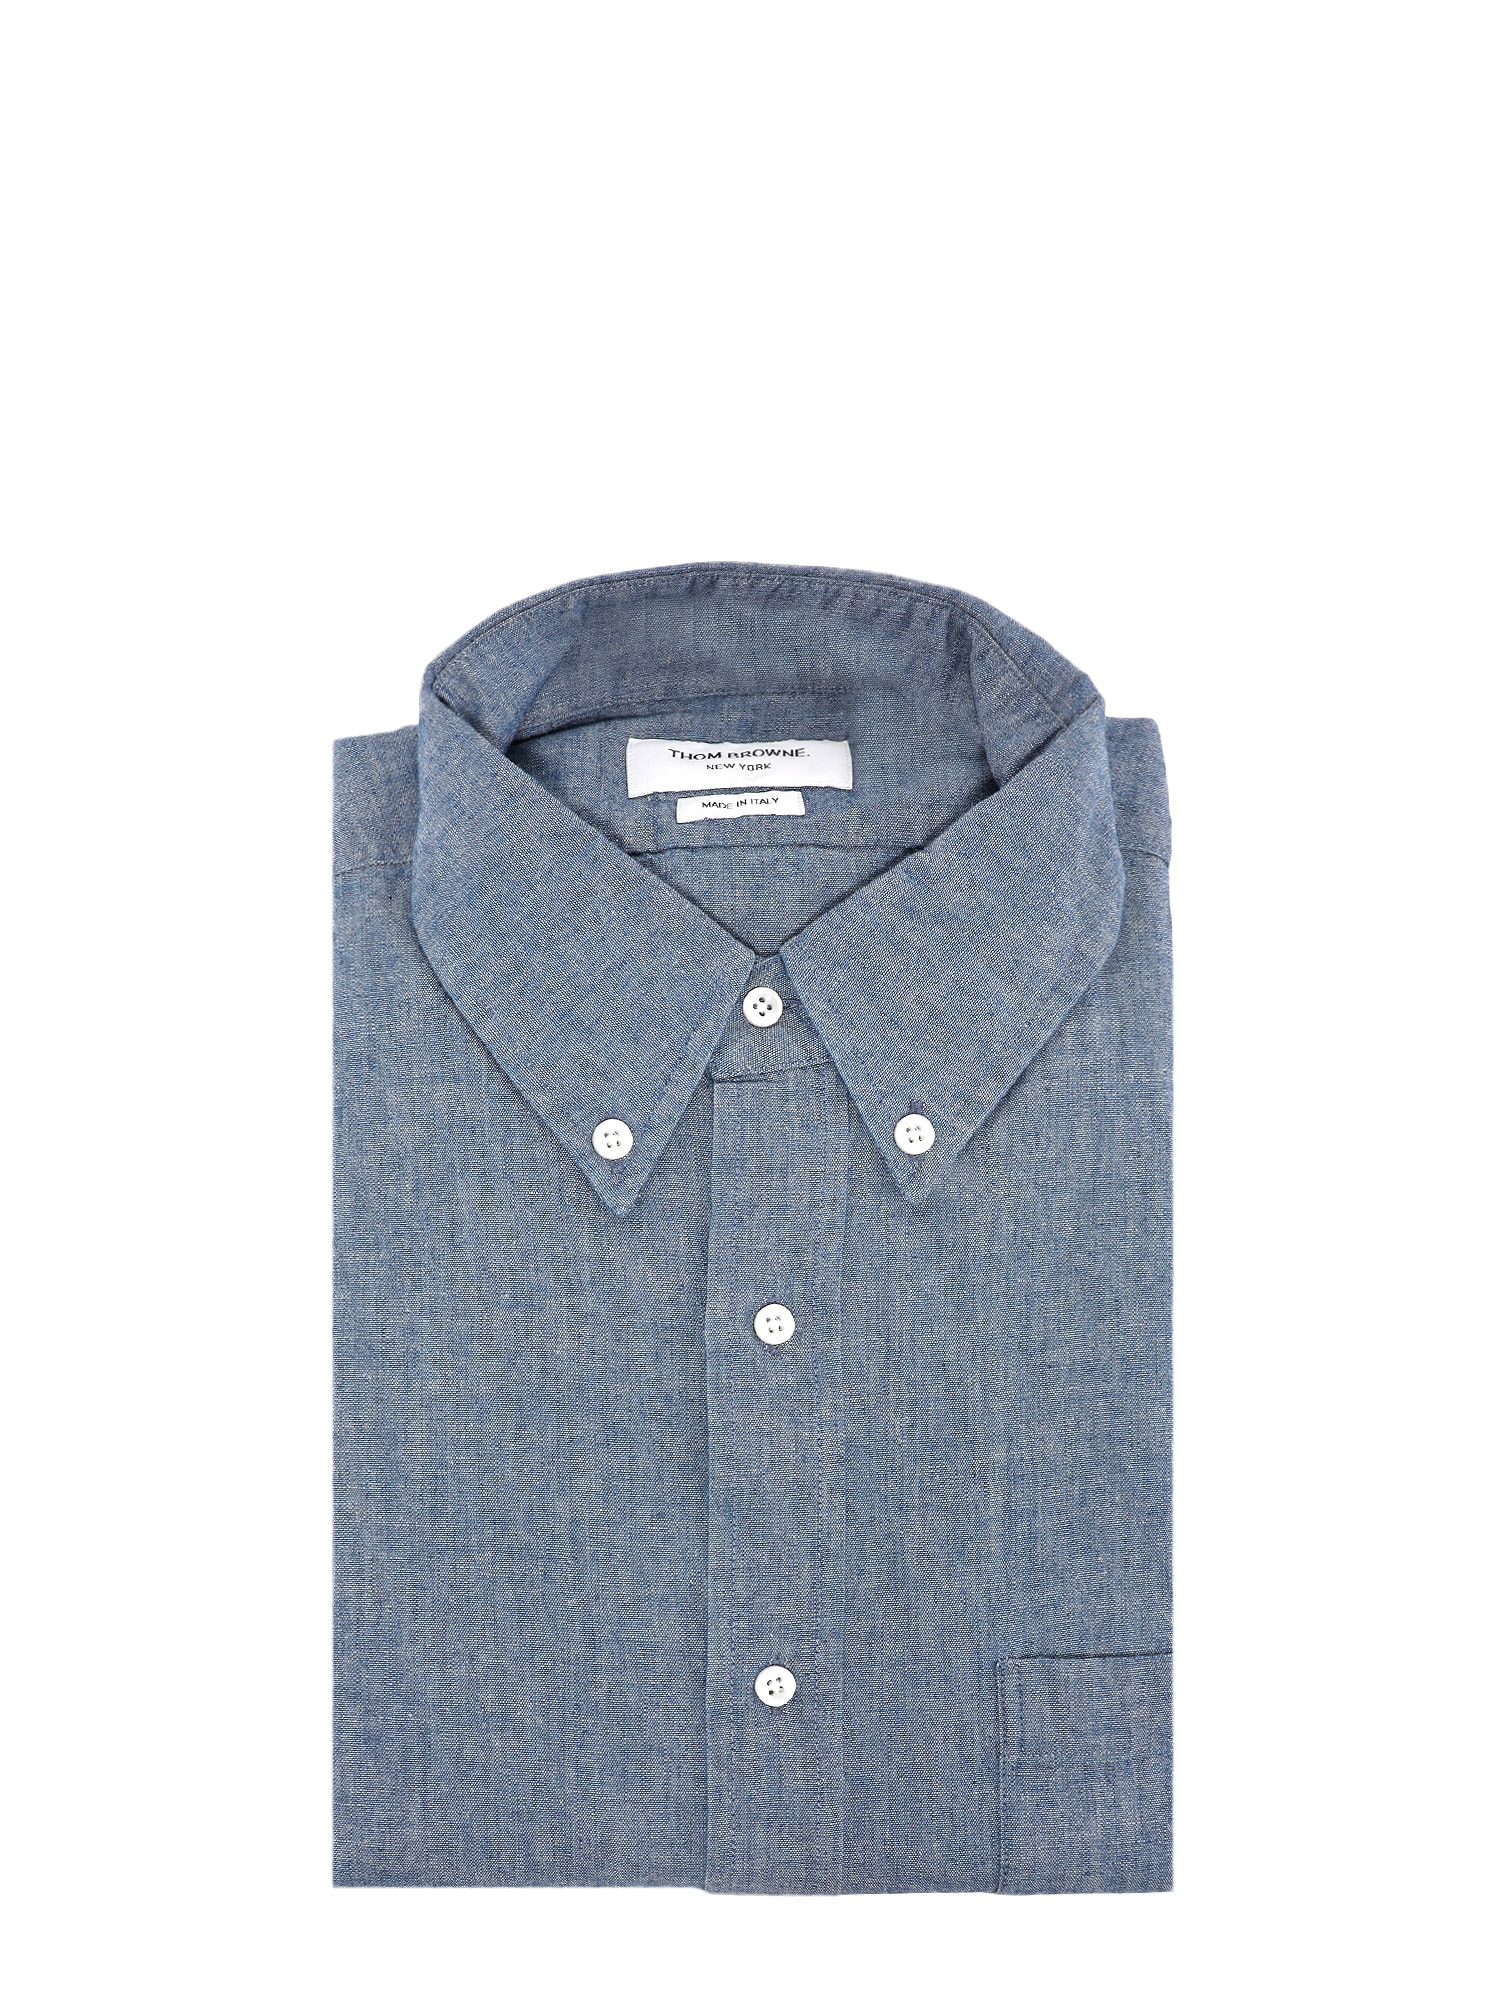 Thom Browne Shirt In Blue